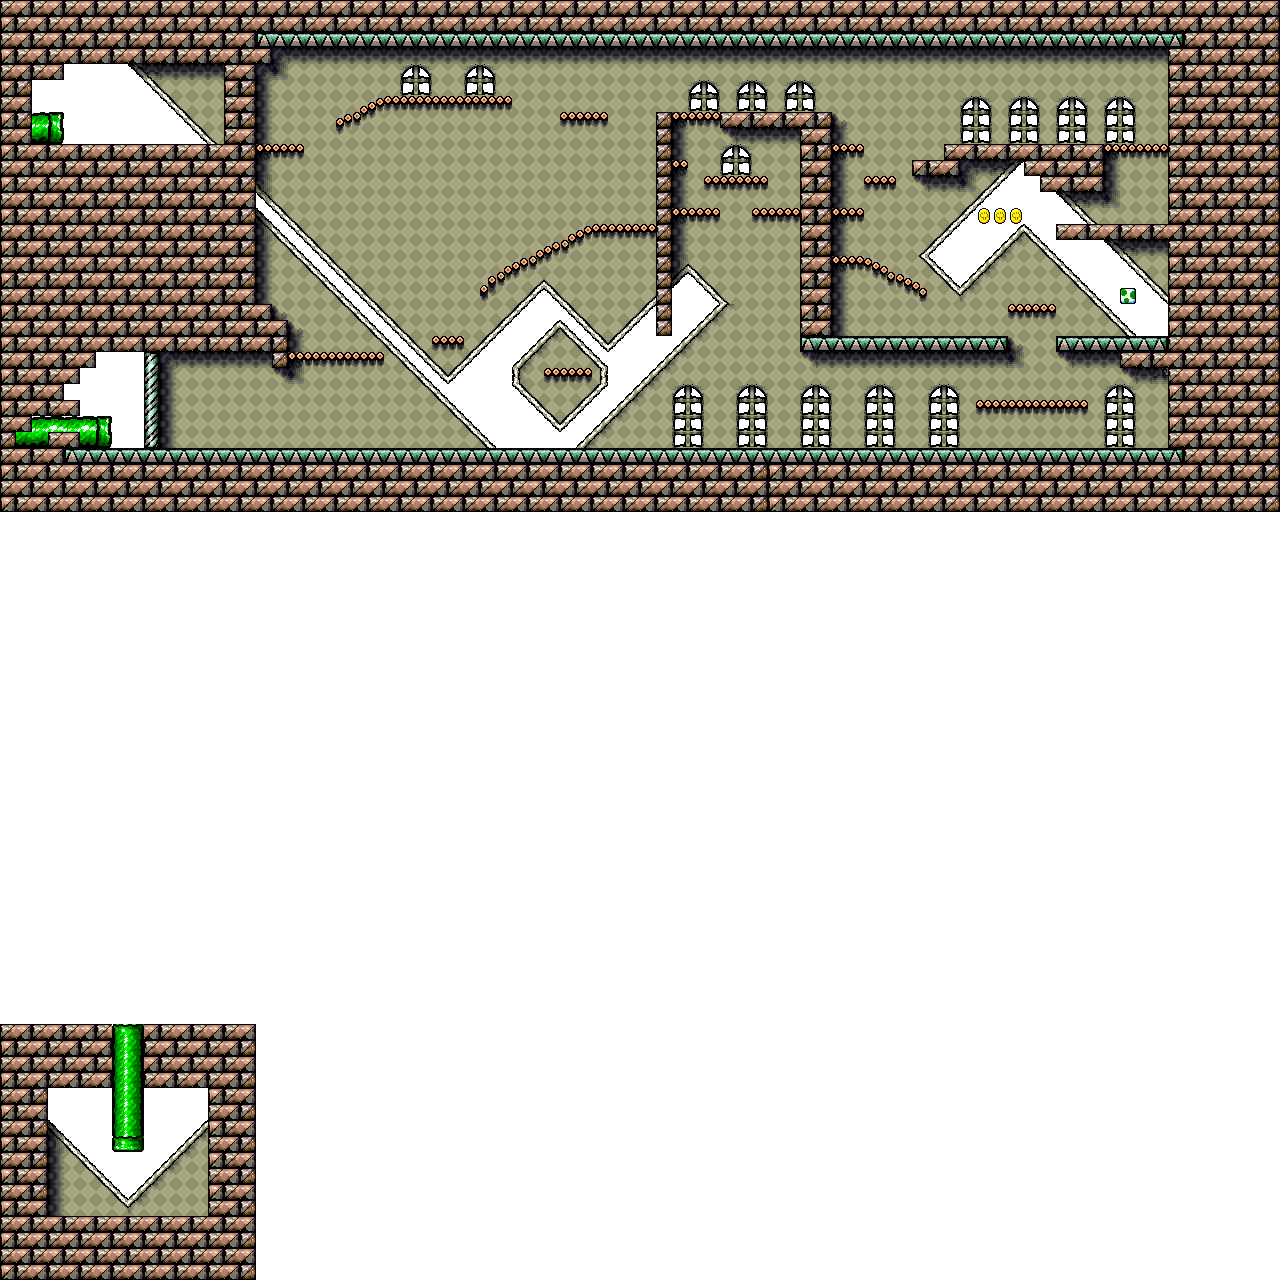 Super Mario World 2: Yoshi's Island - 1-8: Salvo The Slime's Castle (3/4)